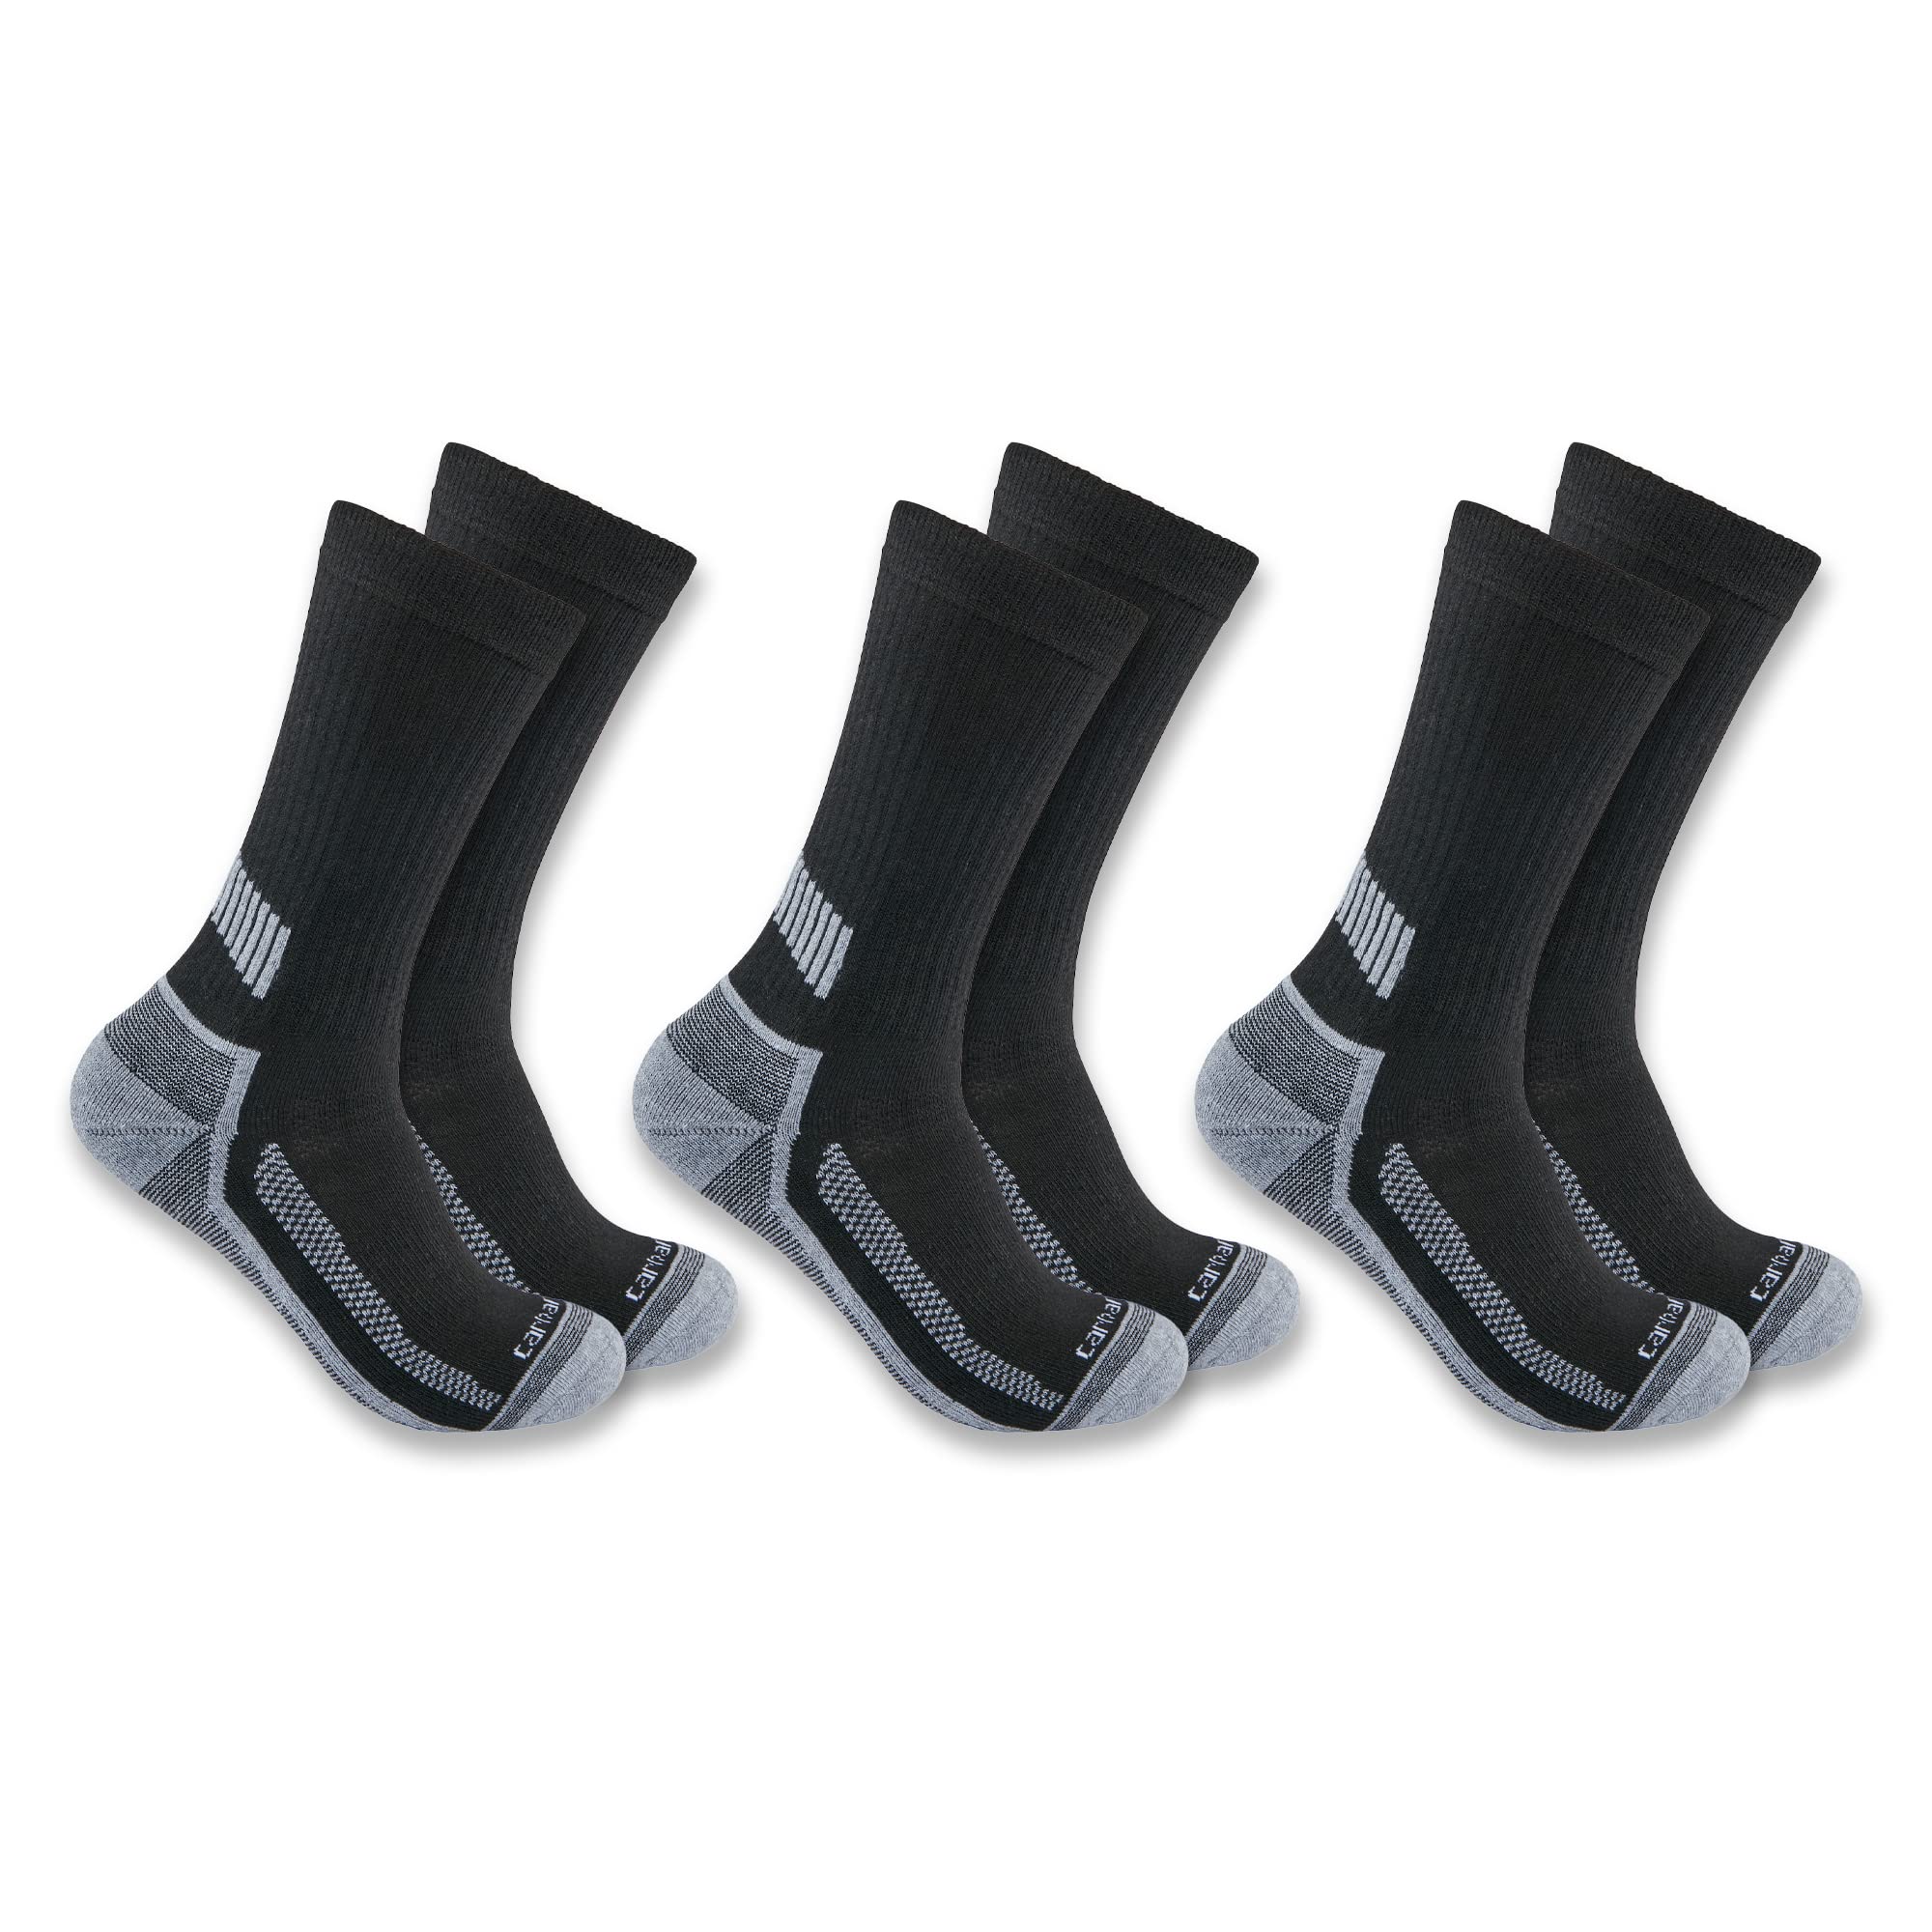 Carhartt mens Men's Force Performance Work Socks 3 Pair Pack